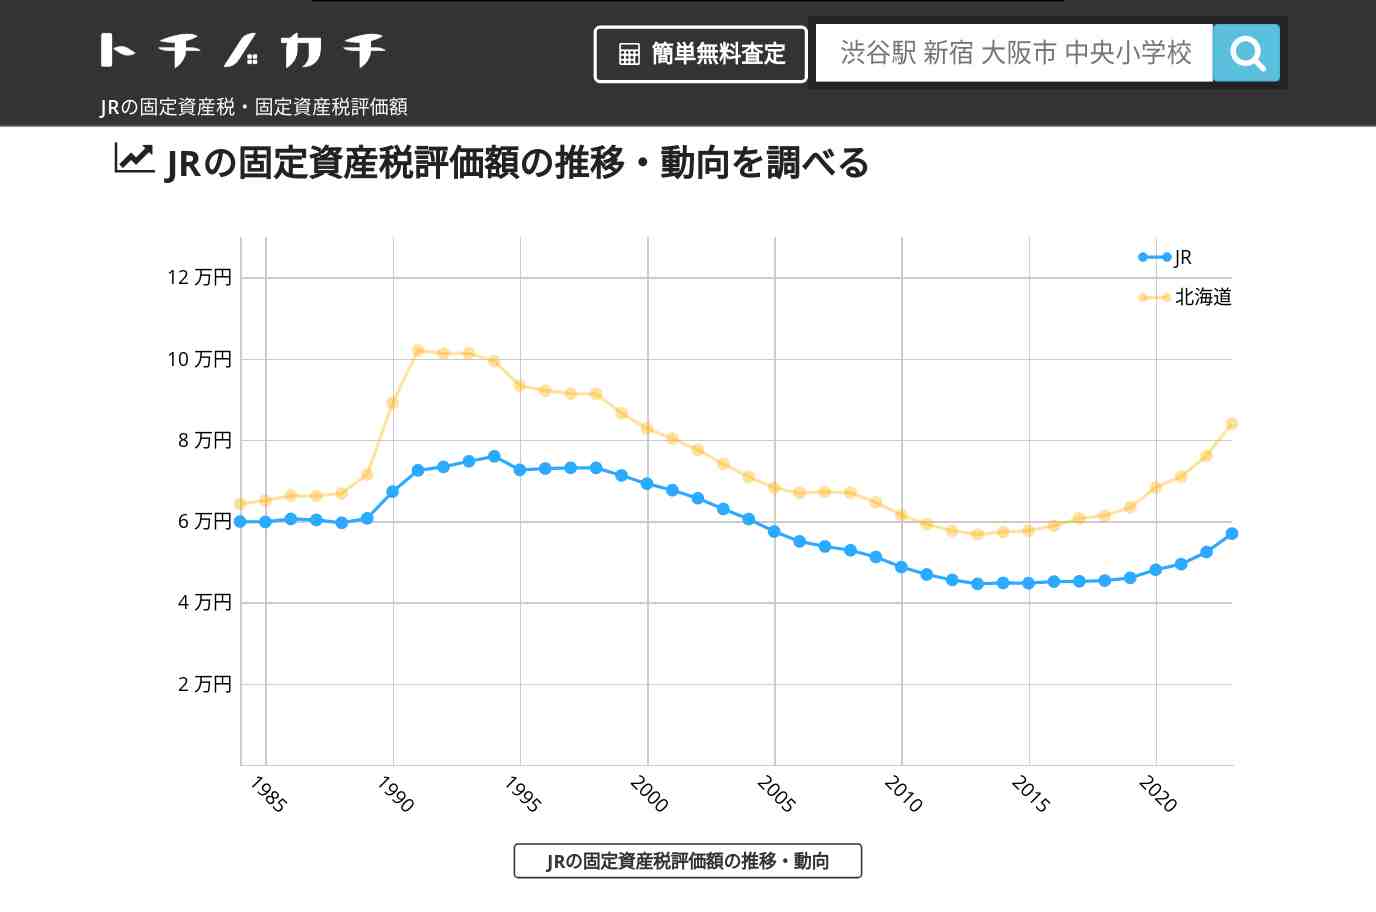 JR(北海道)の固定資産税・固定資産税評価額 | トチノカチ